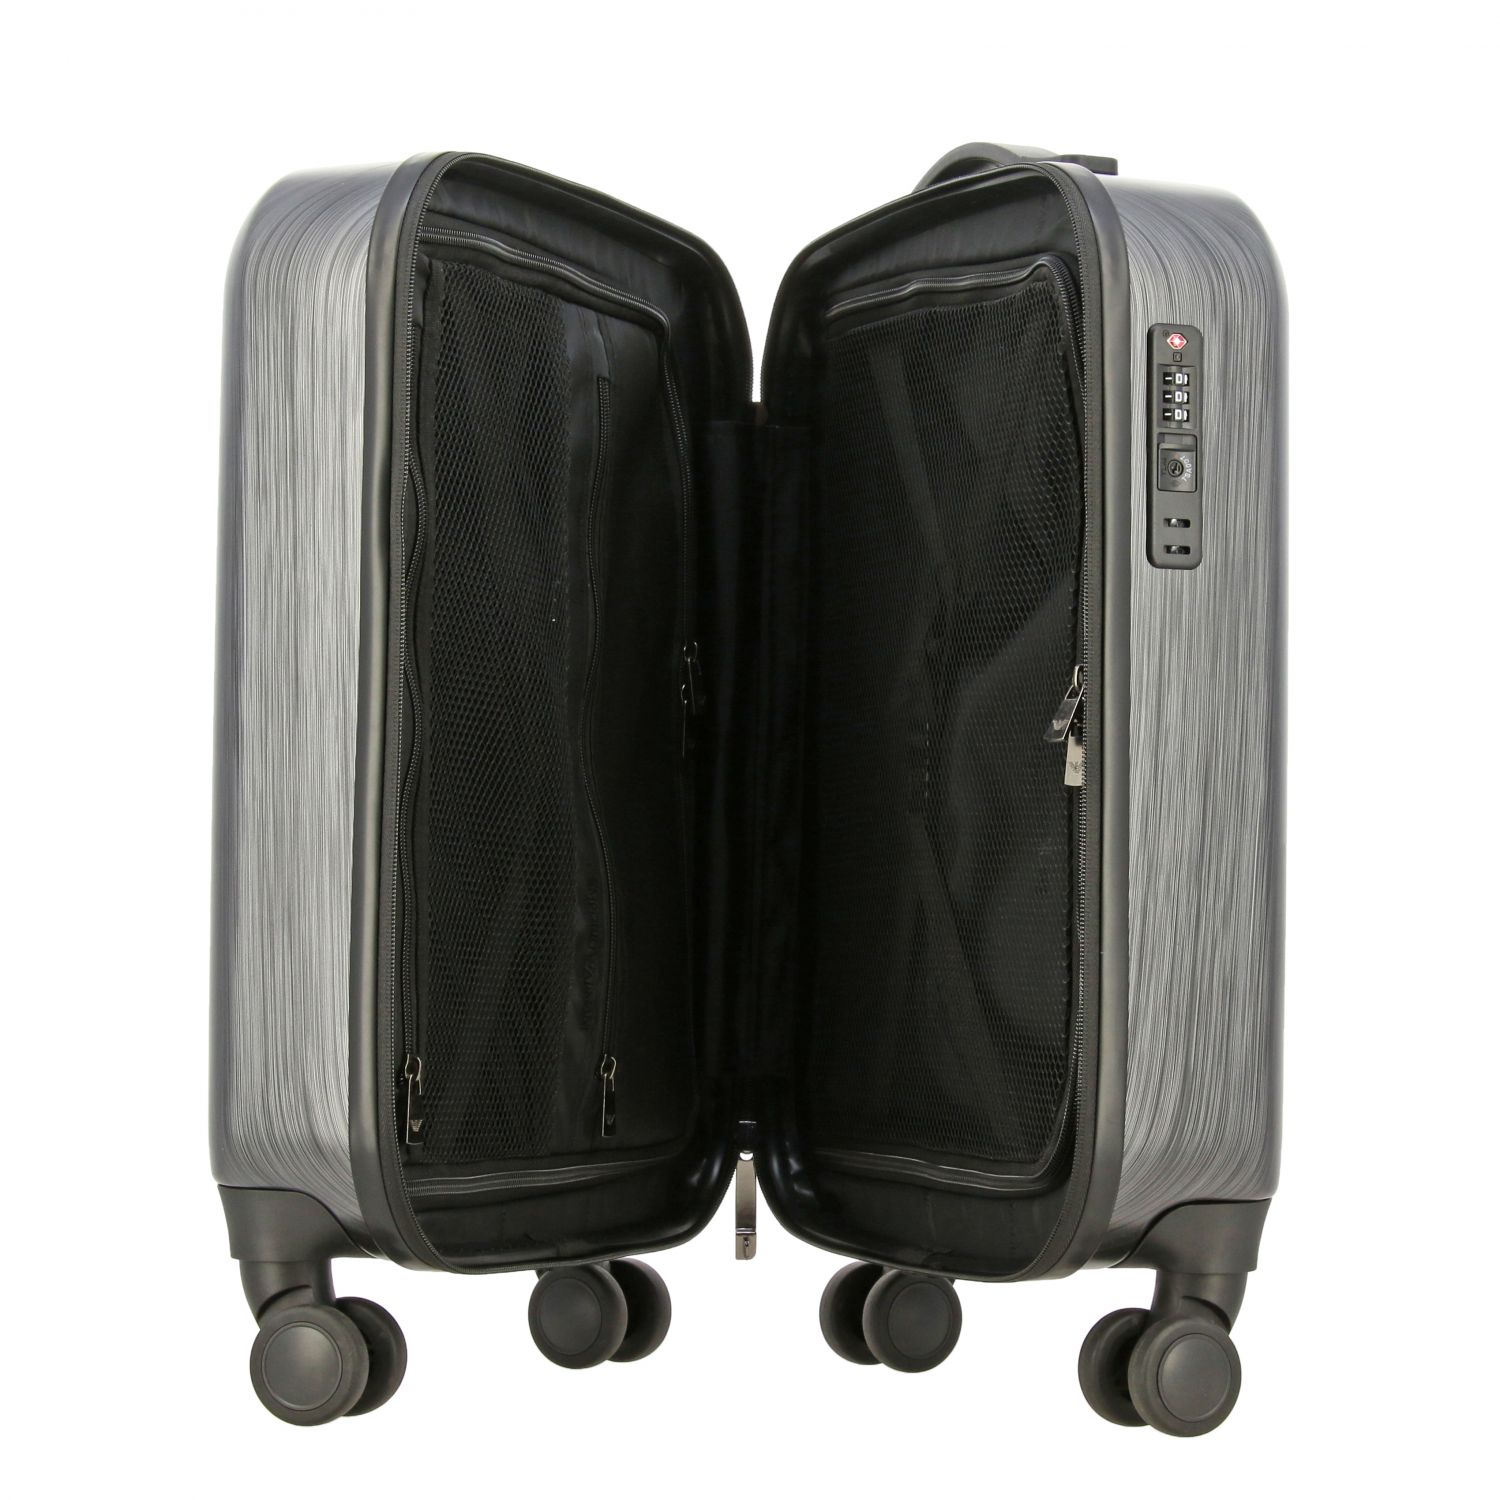 armani travel suitcase